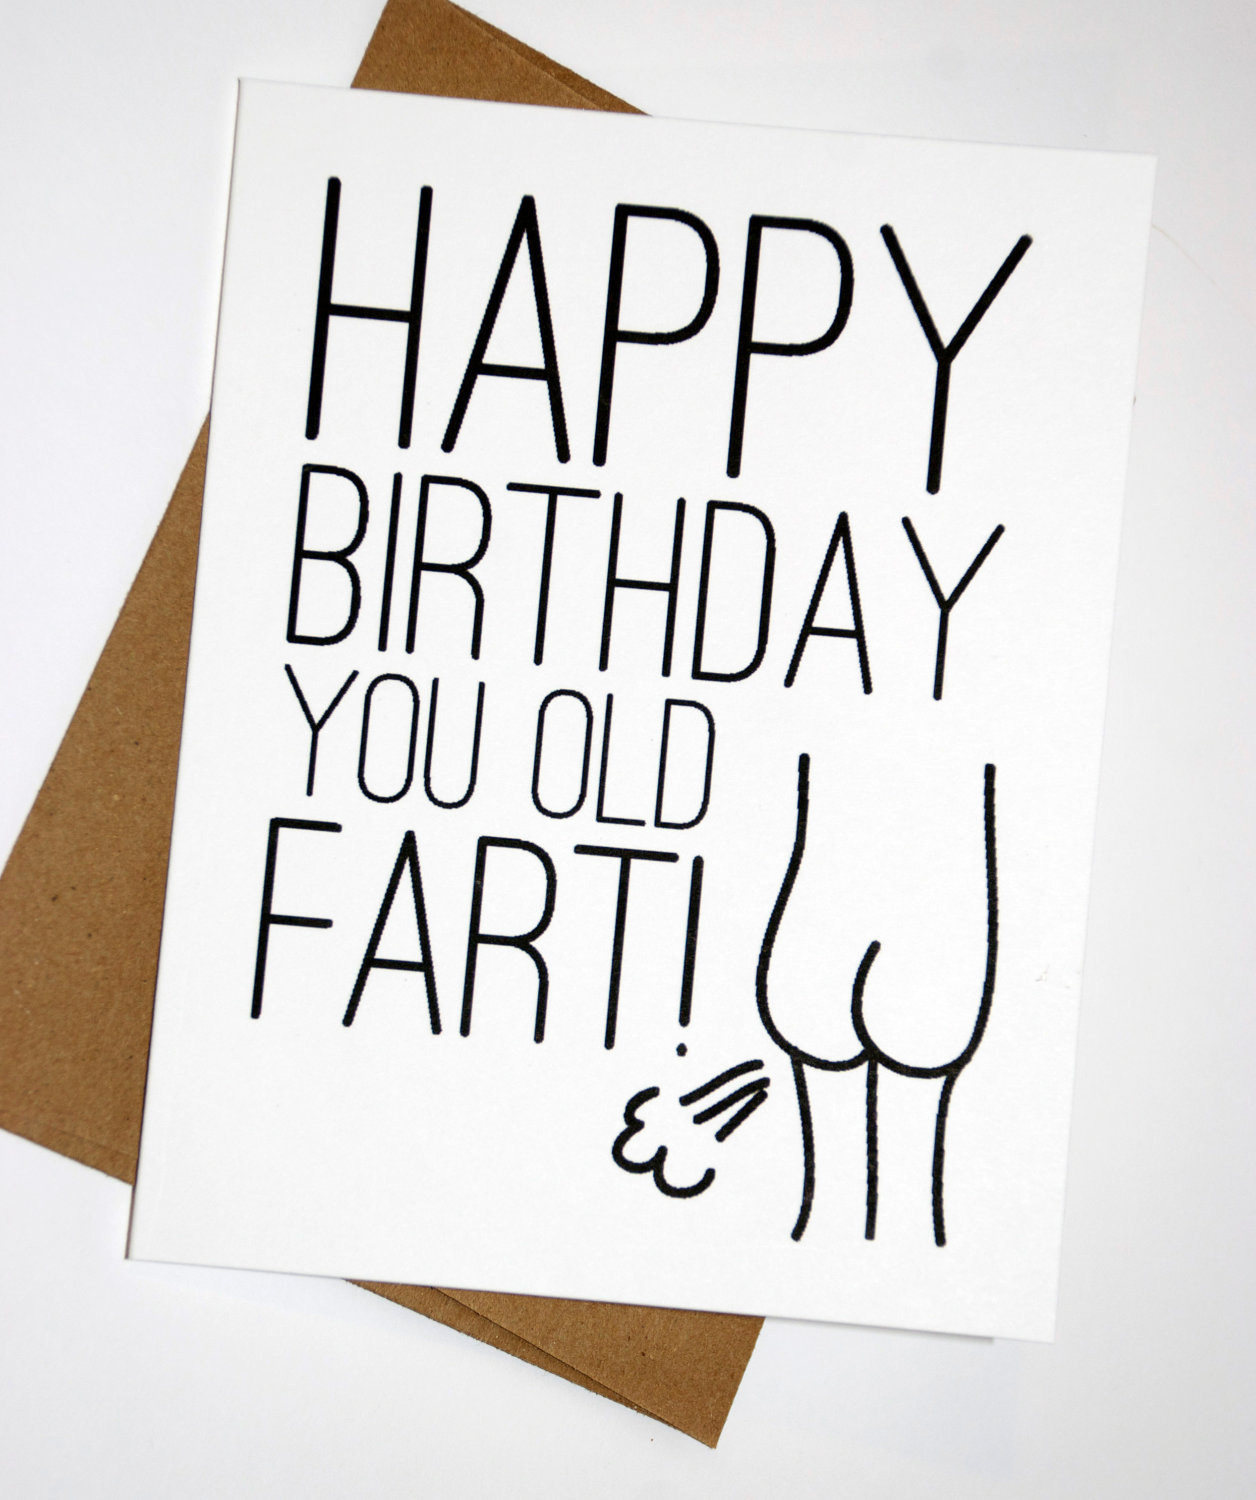 Birthday Card Funny
 Funny Birthday Card Happy Birthday You Old Fart by RowHouse14